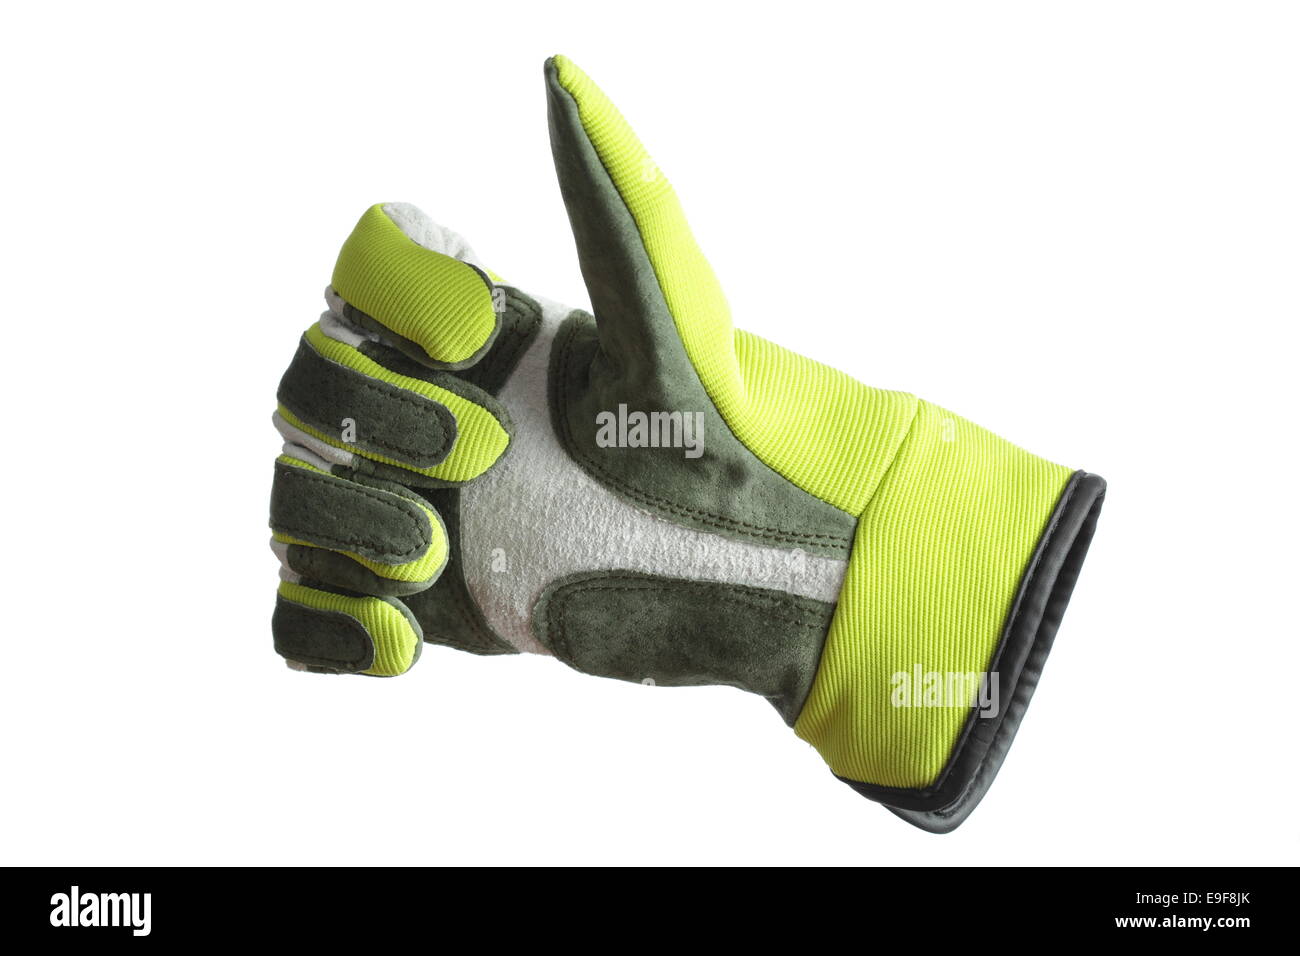 thumb up glove Stock Photo